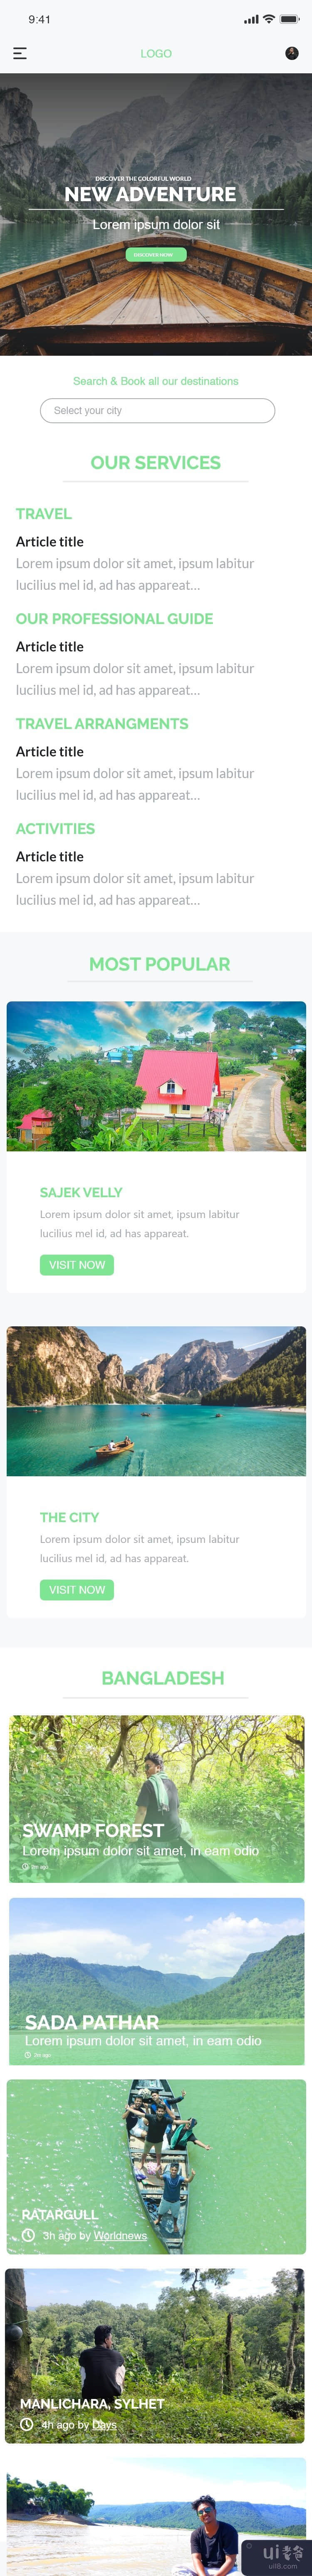 旅游网站模板UI设计(Tour and Travel website template UI design)插图1